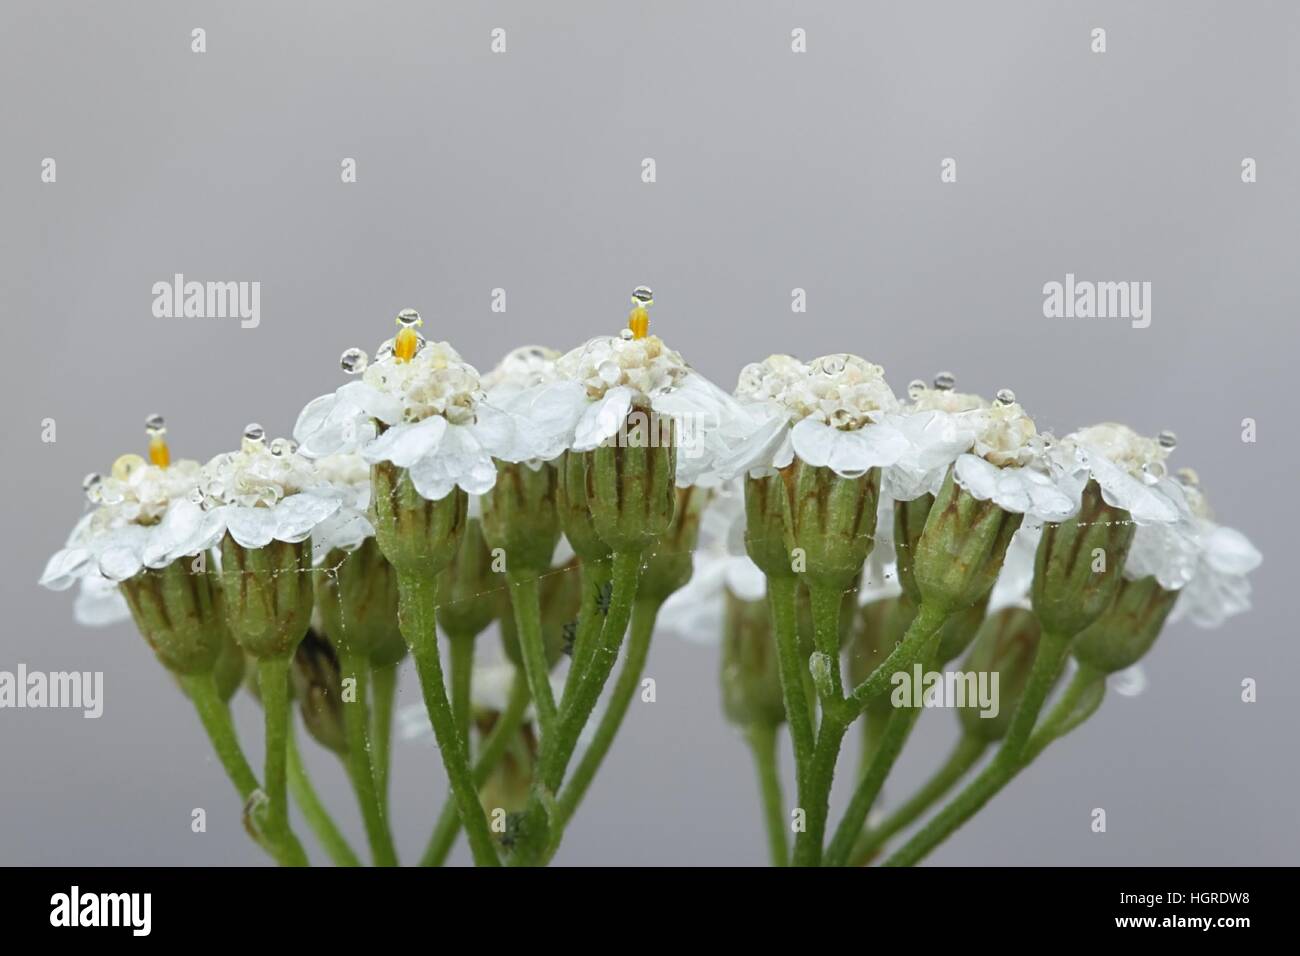 Common yarrow, Achillea millefolium Stock Photo